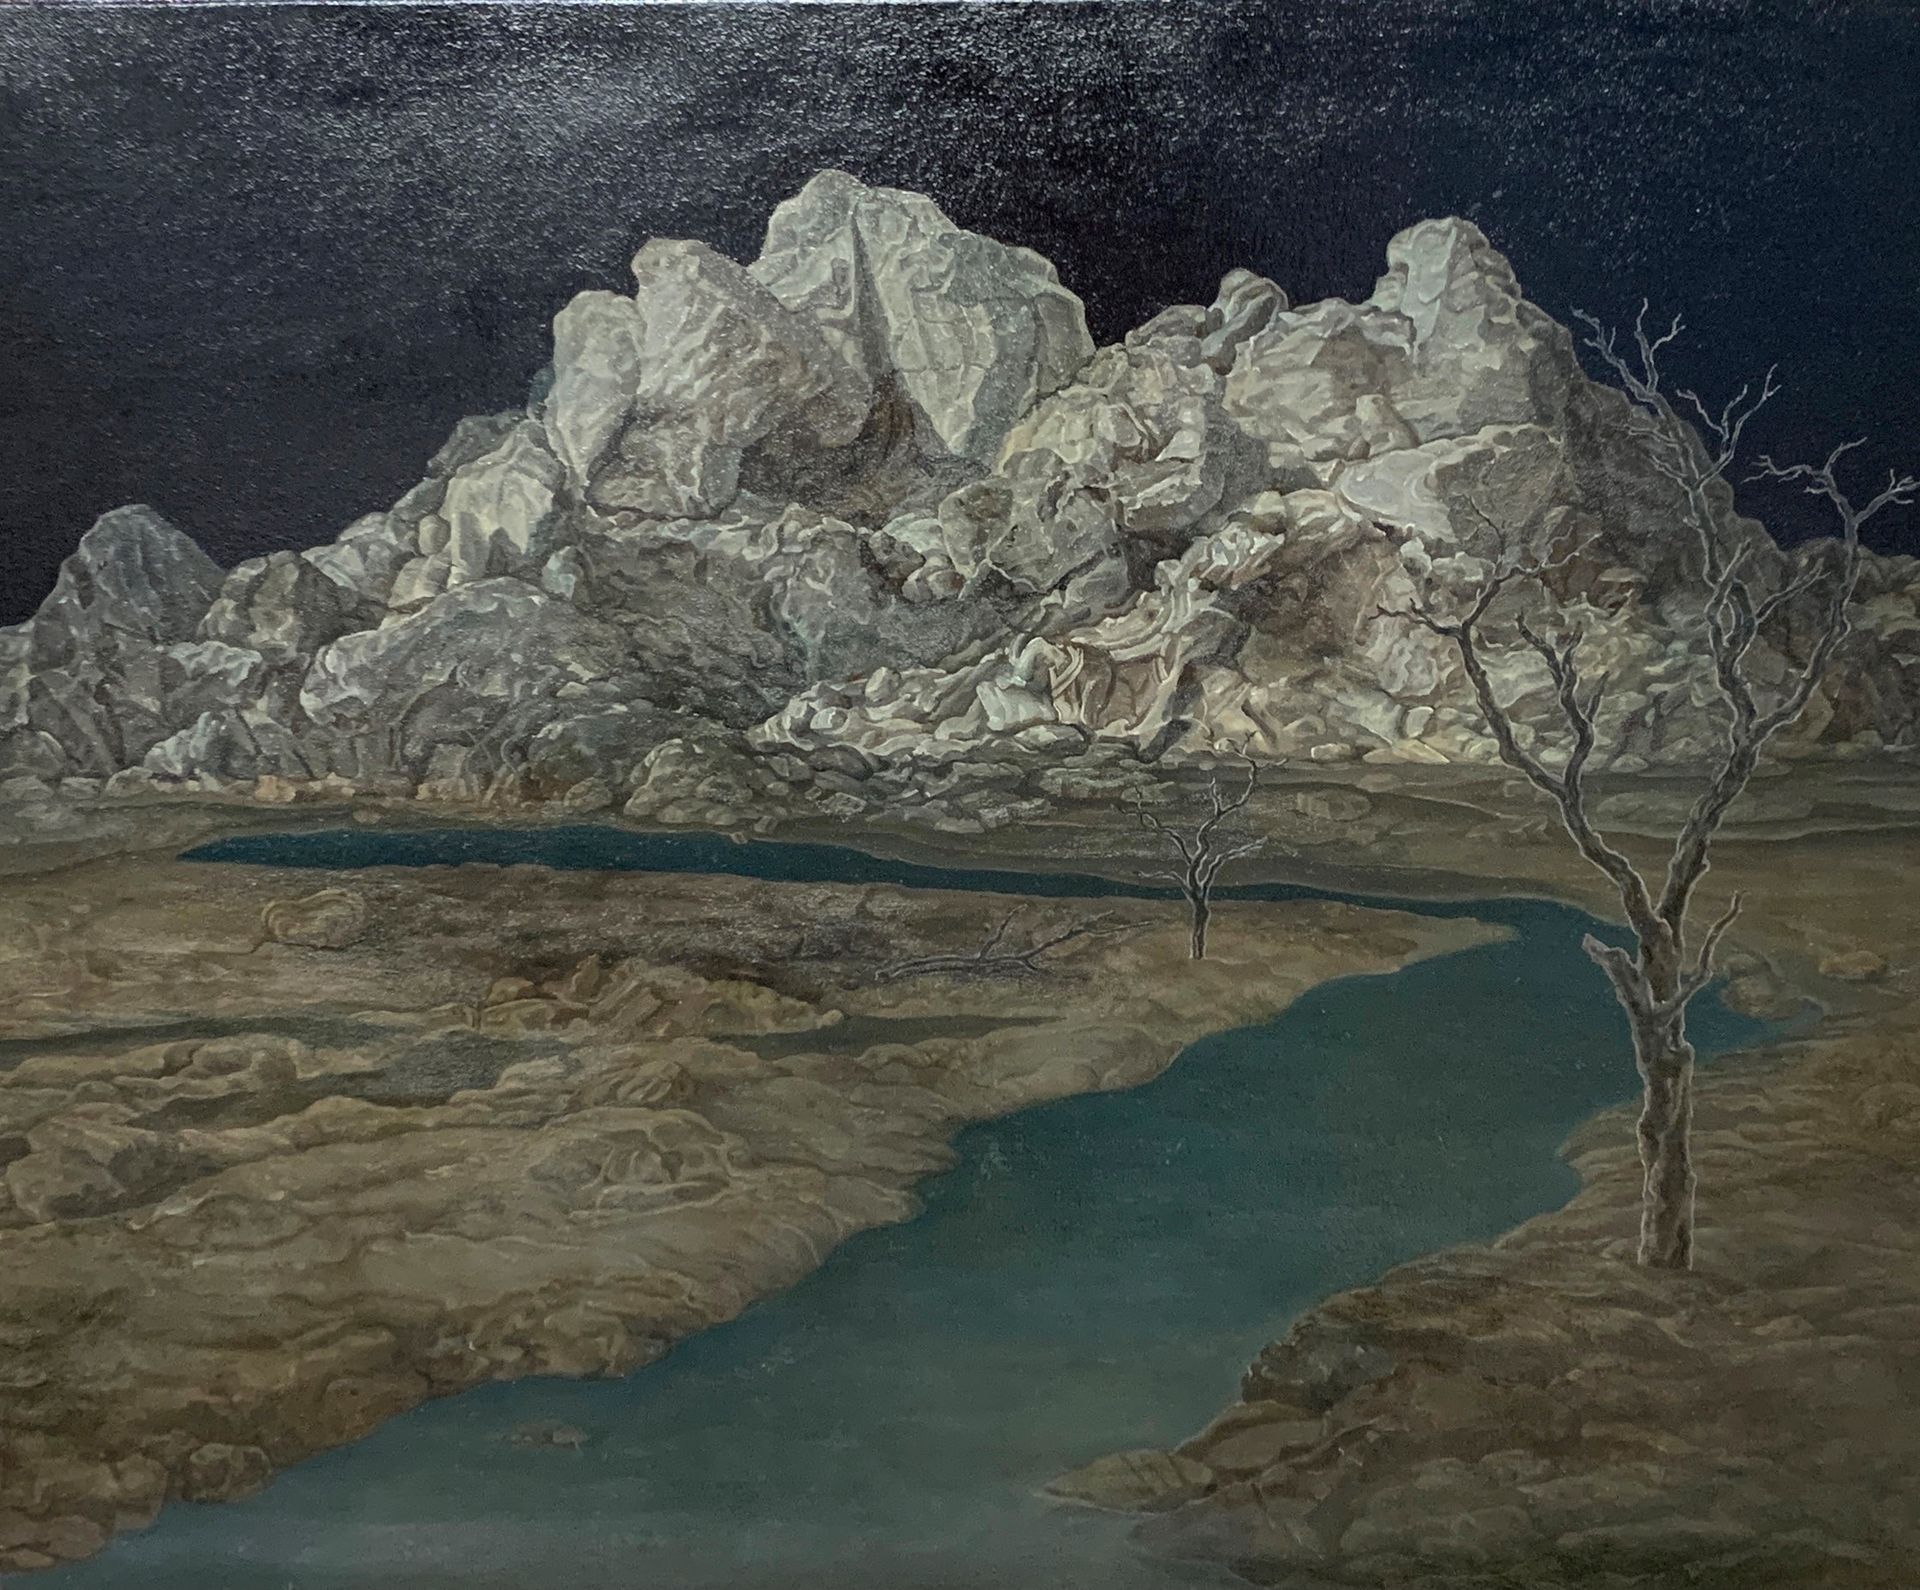 LI DONGLU (1982) Montaña y río, 2016
Óleo sobre lienzo
Tamaño: 38 x 46 cm